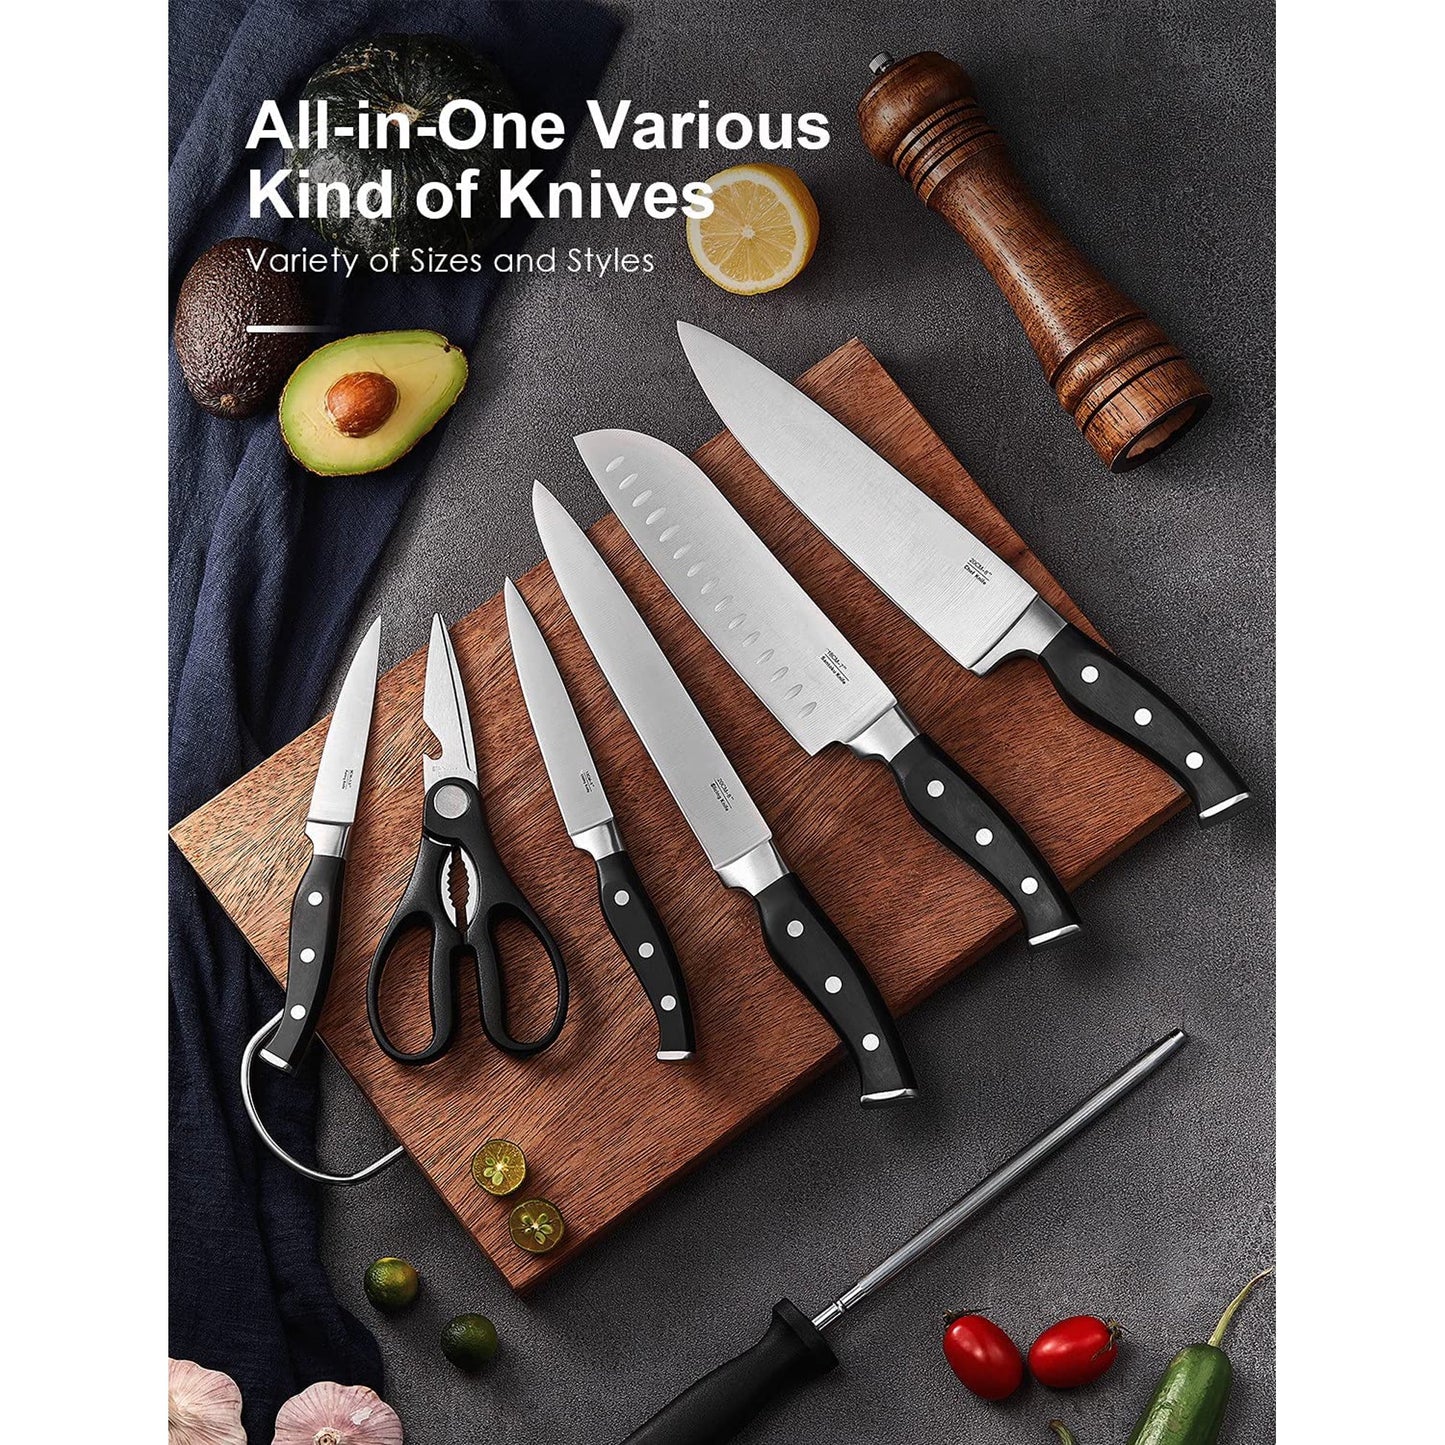 Deik Knife Sets, 15 Pieces German Stainless Steel Kitchen Knife Block Sets